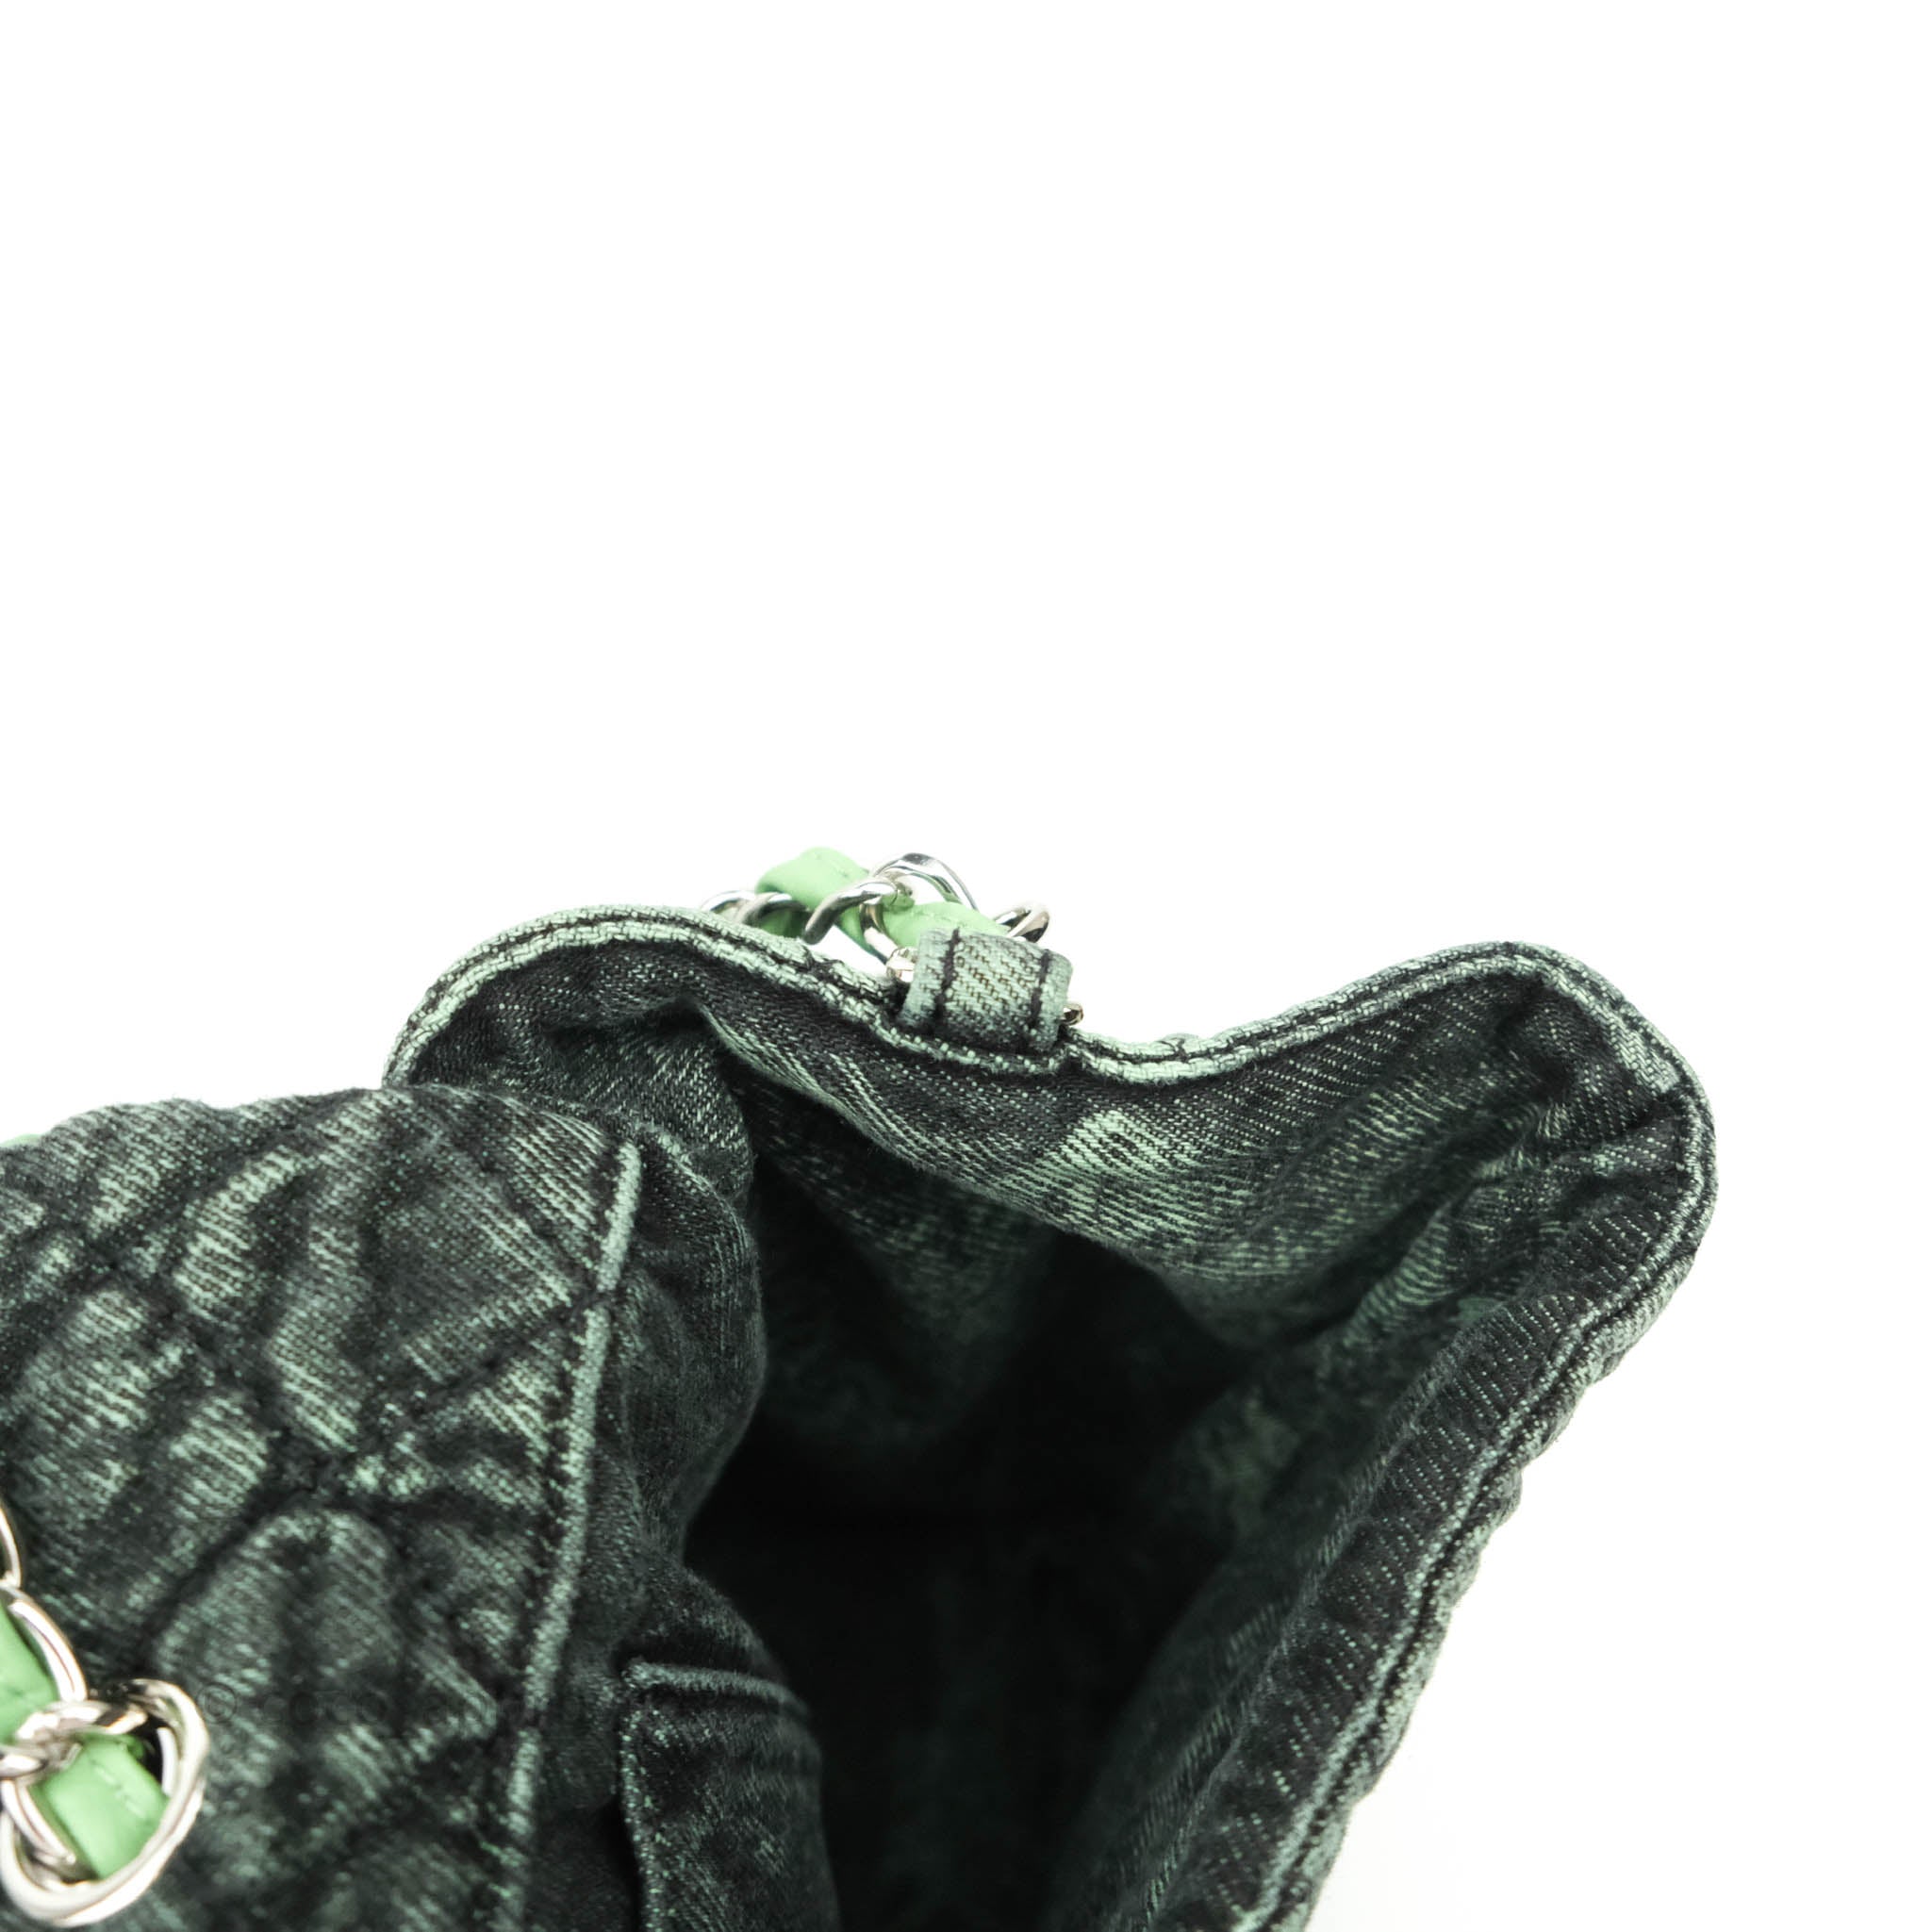 Chanel Small XXL Denimpression Flap Bag Aged Green Denim Silver Hardwa –  Coco Approved Studio